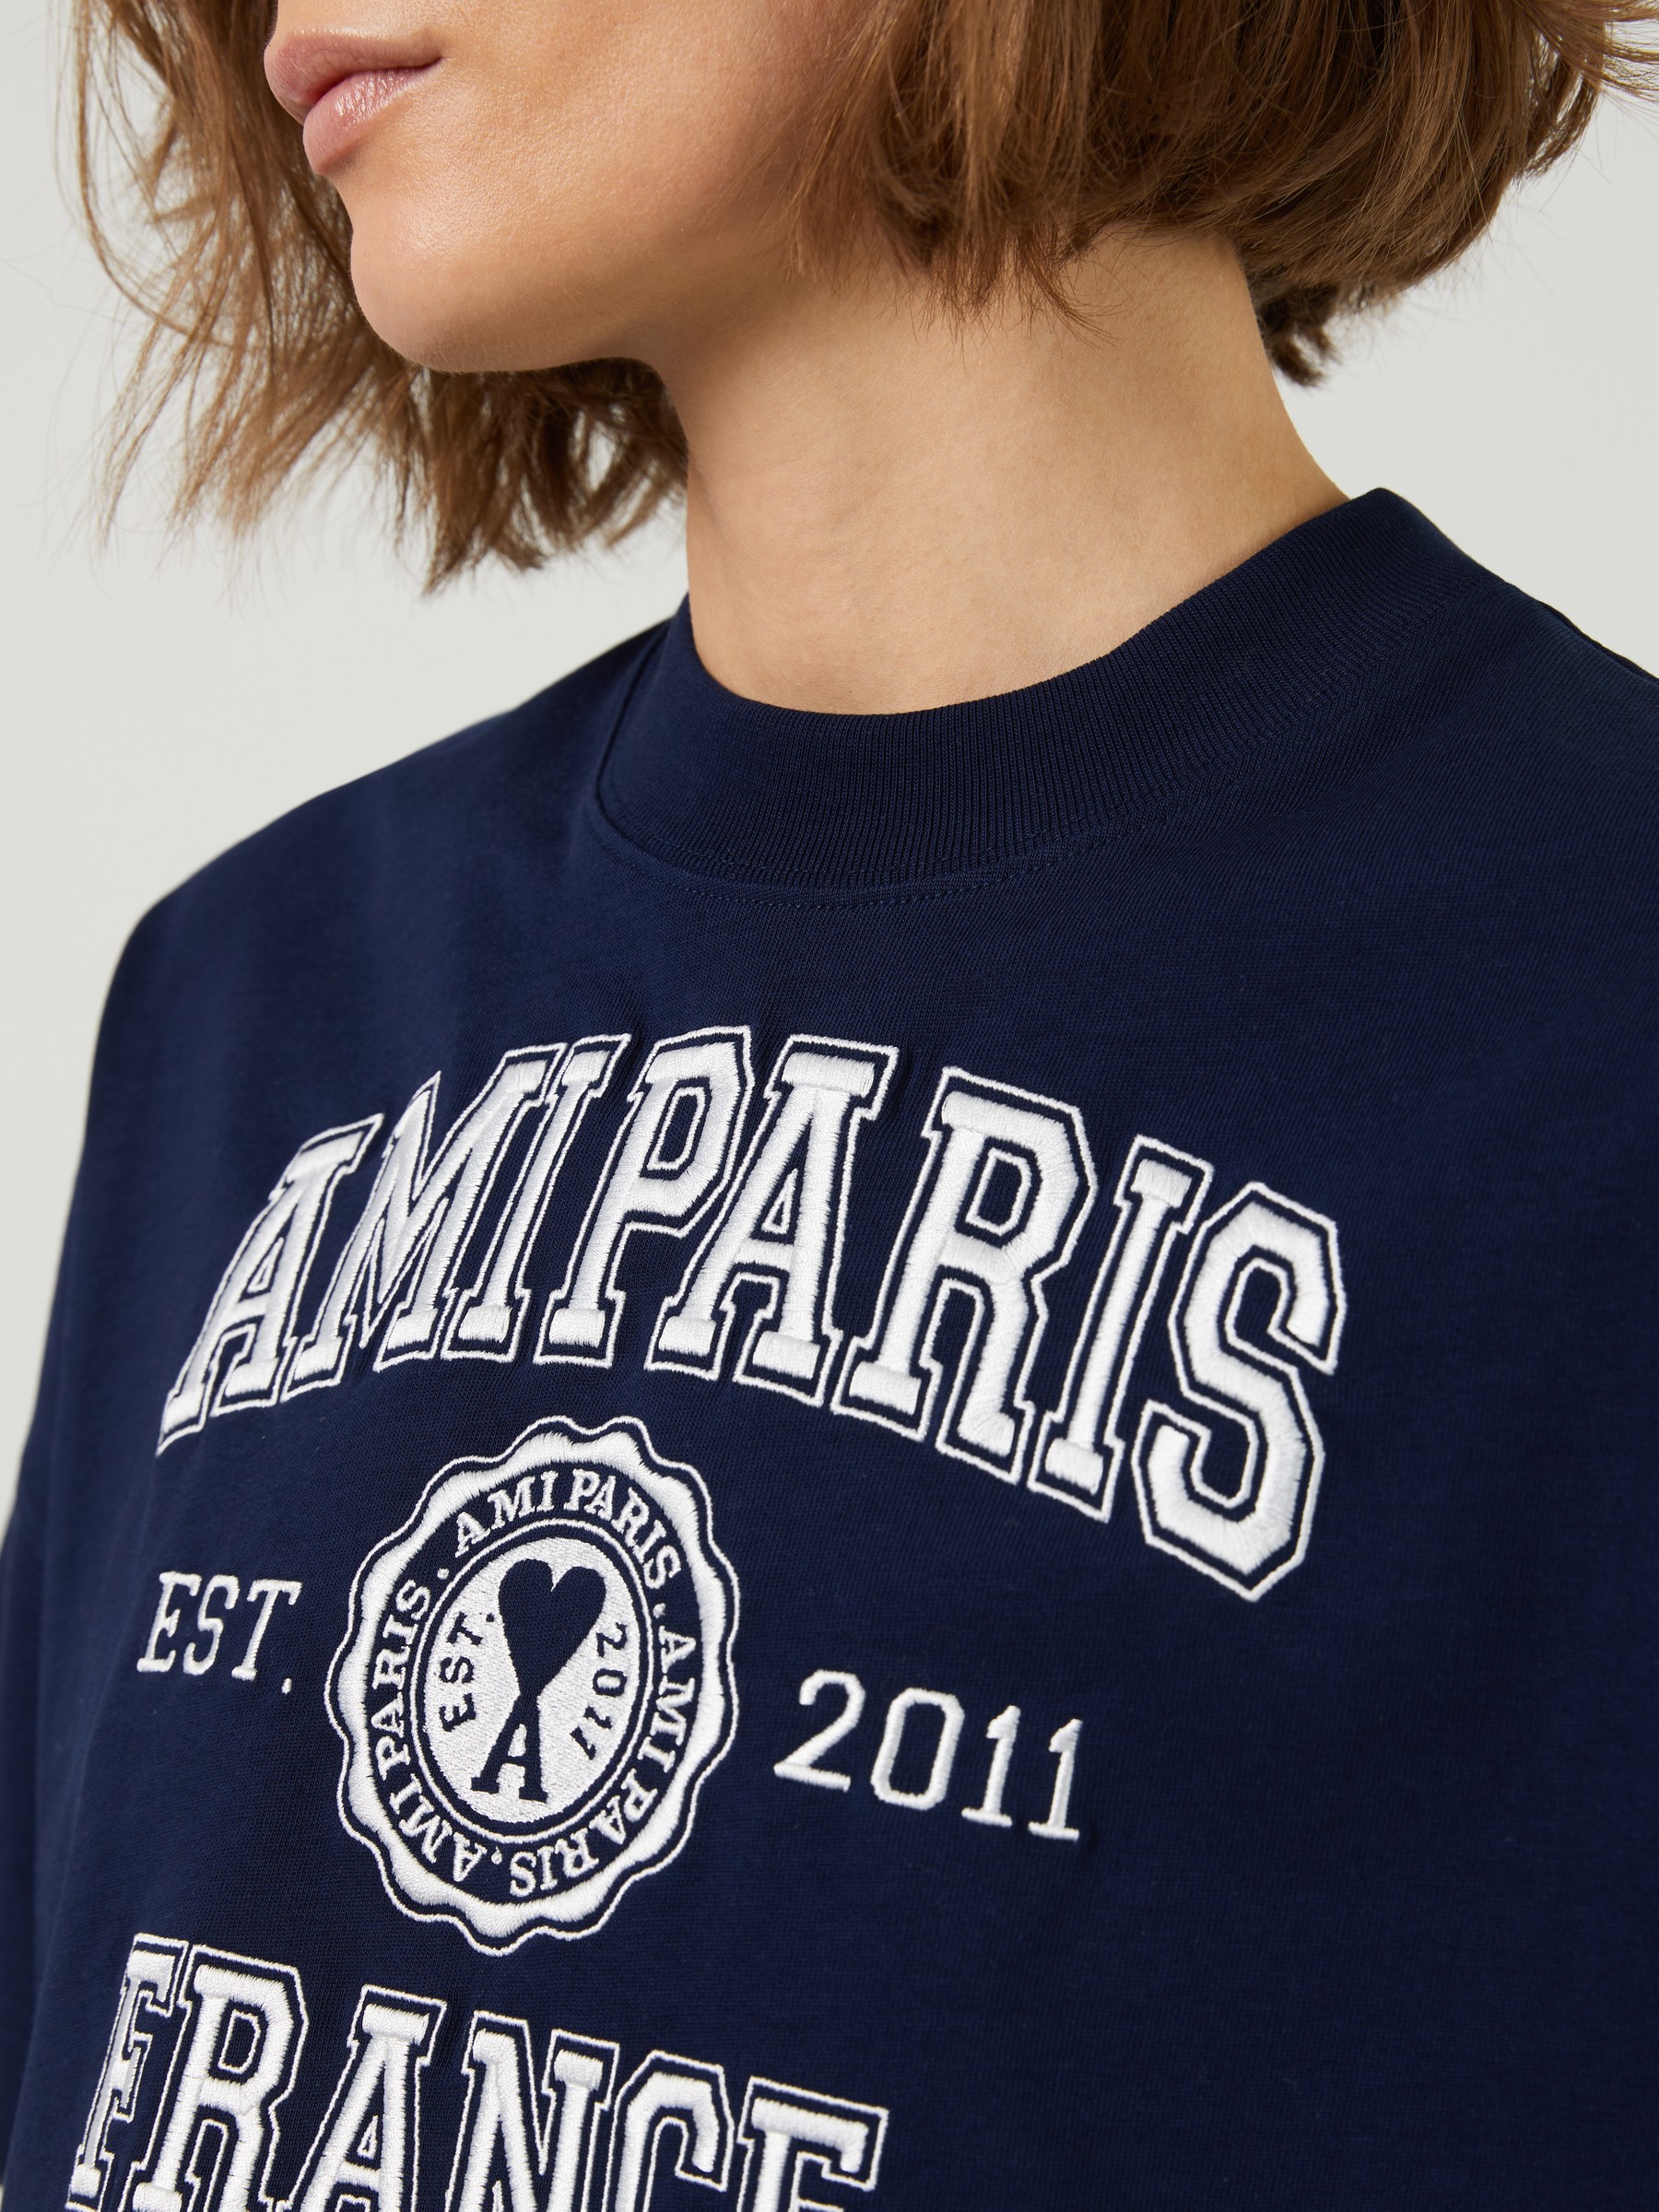 AMI PARIS T-shirt 'Ami Paris France' Navy blue | T-shirts